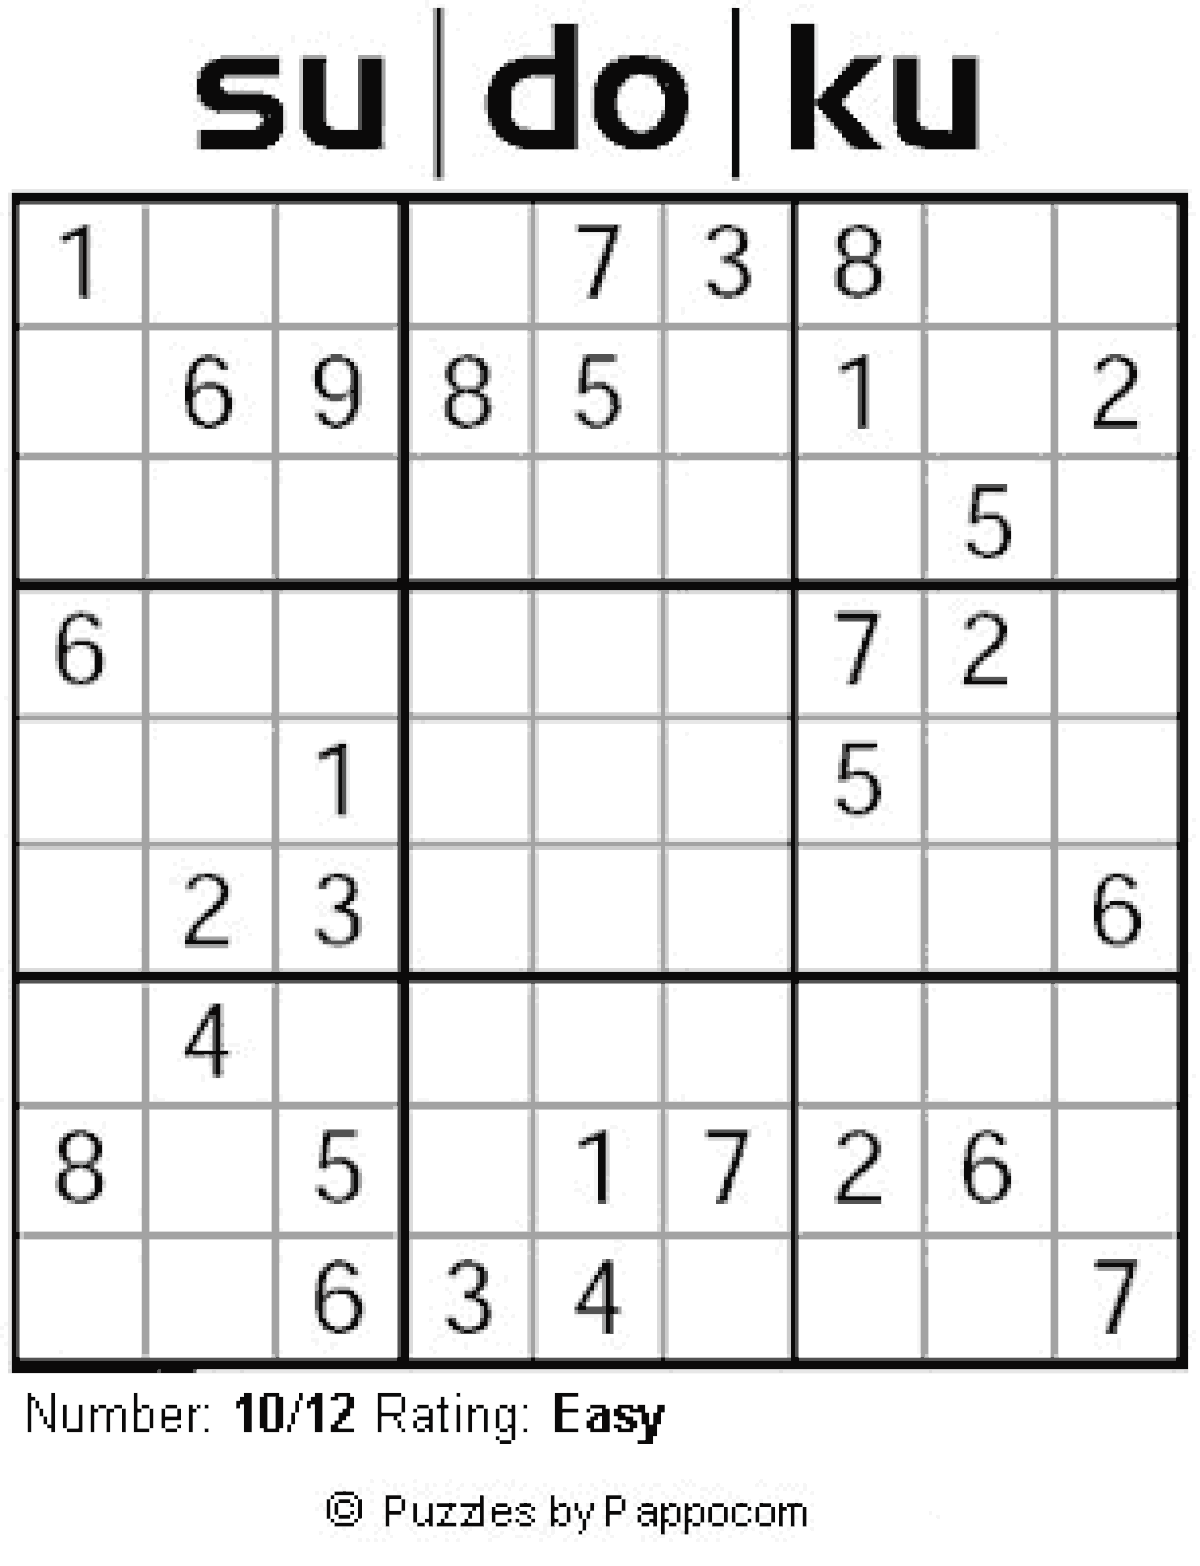 Pappocom Sudoku Key